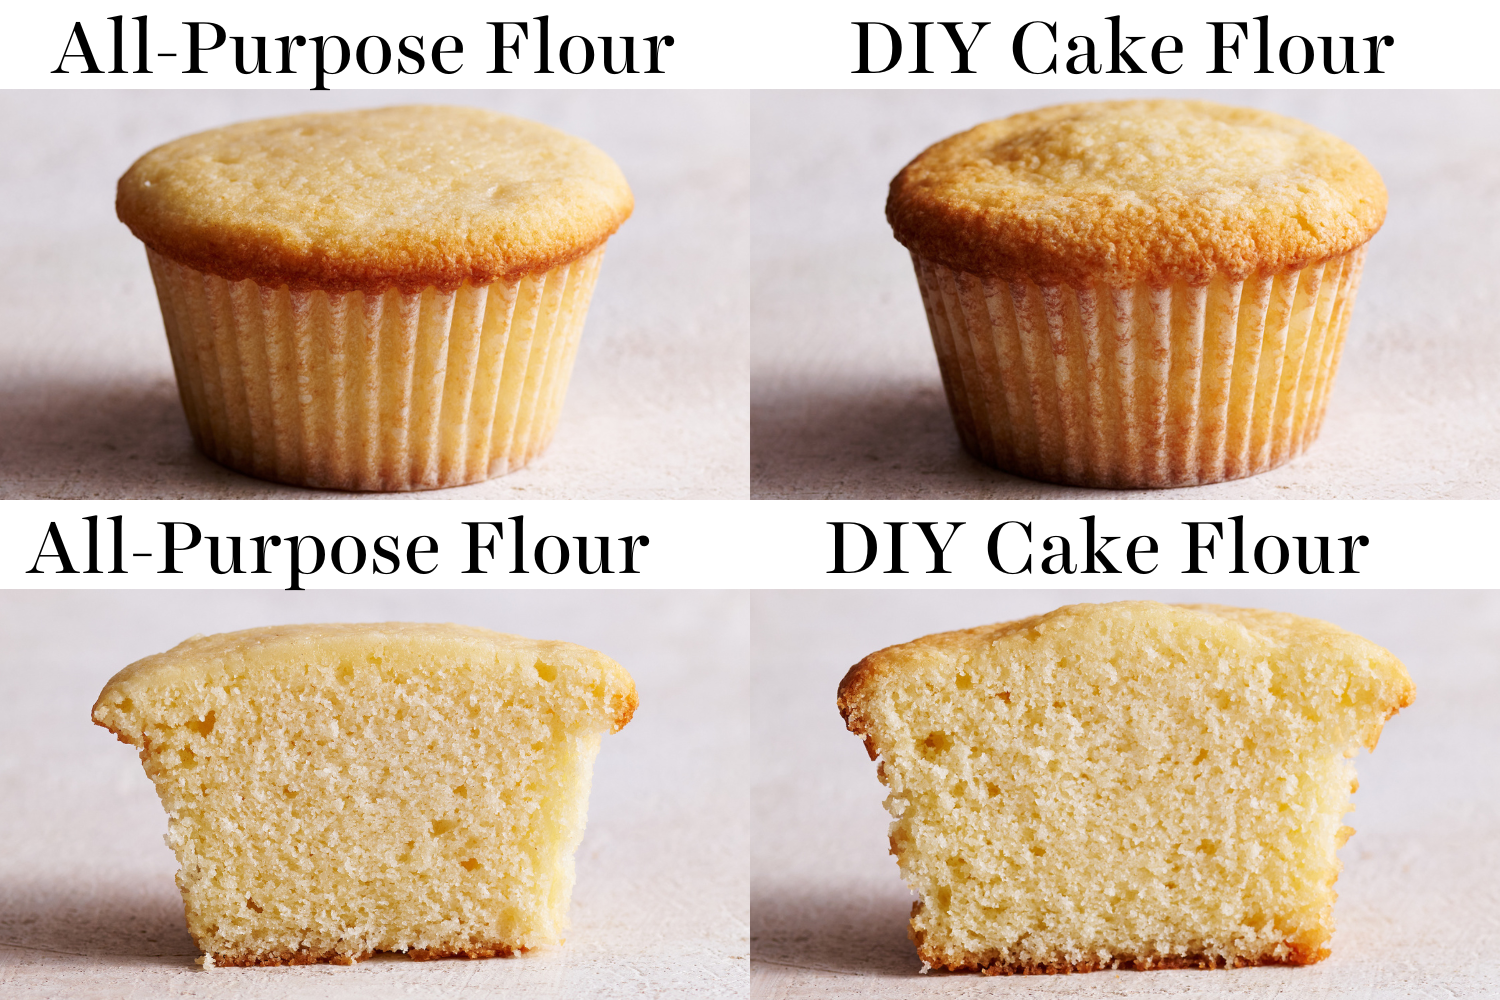 comparison of cupcakes made with all-purpose flour vs. DIY cake flour.